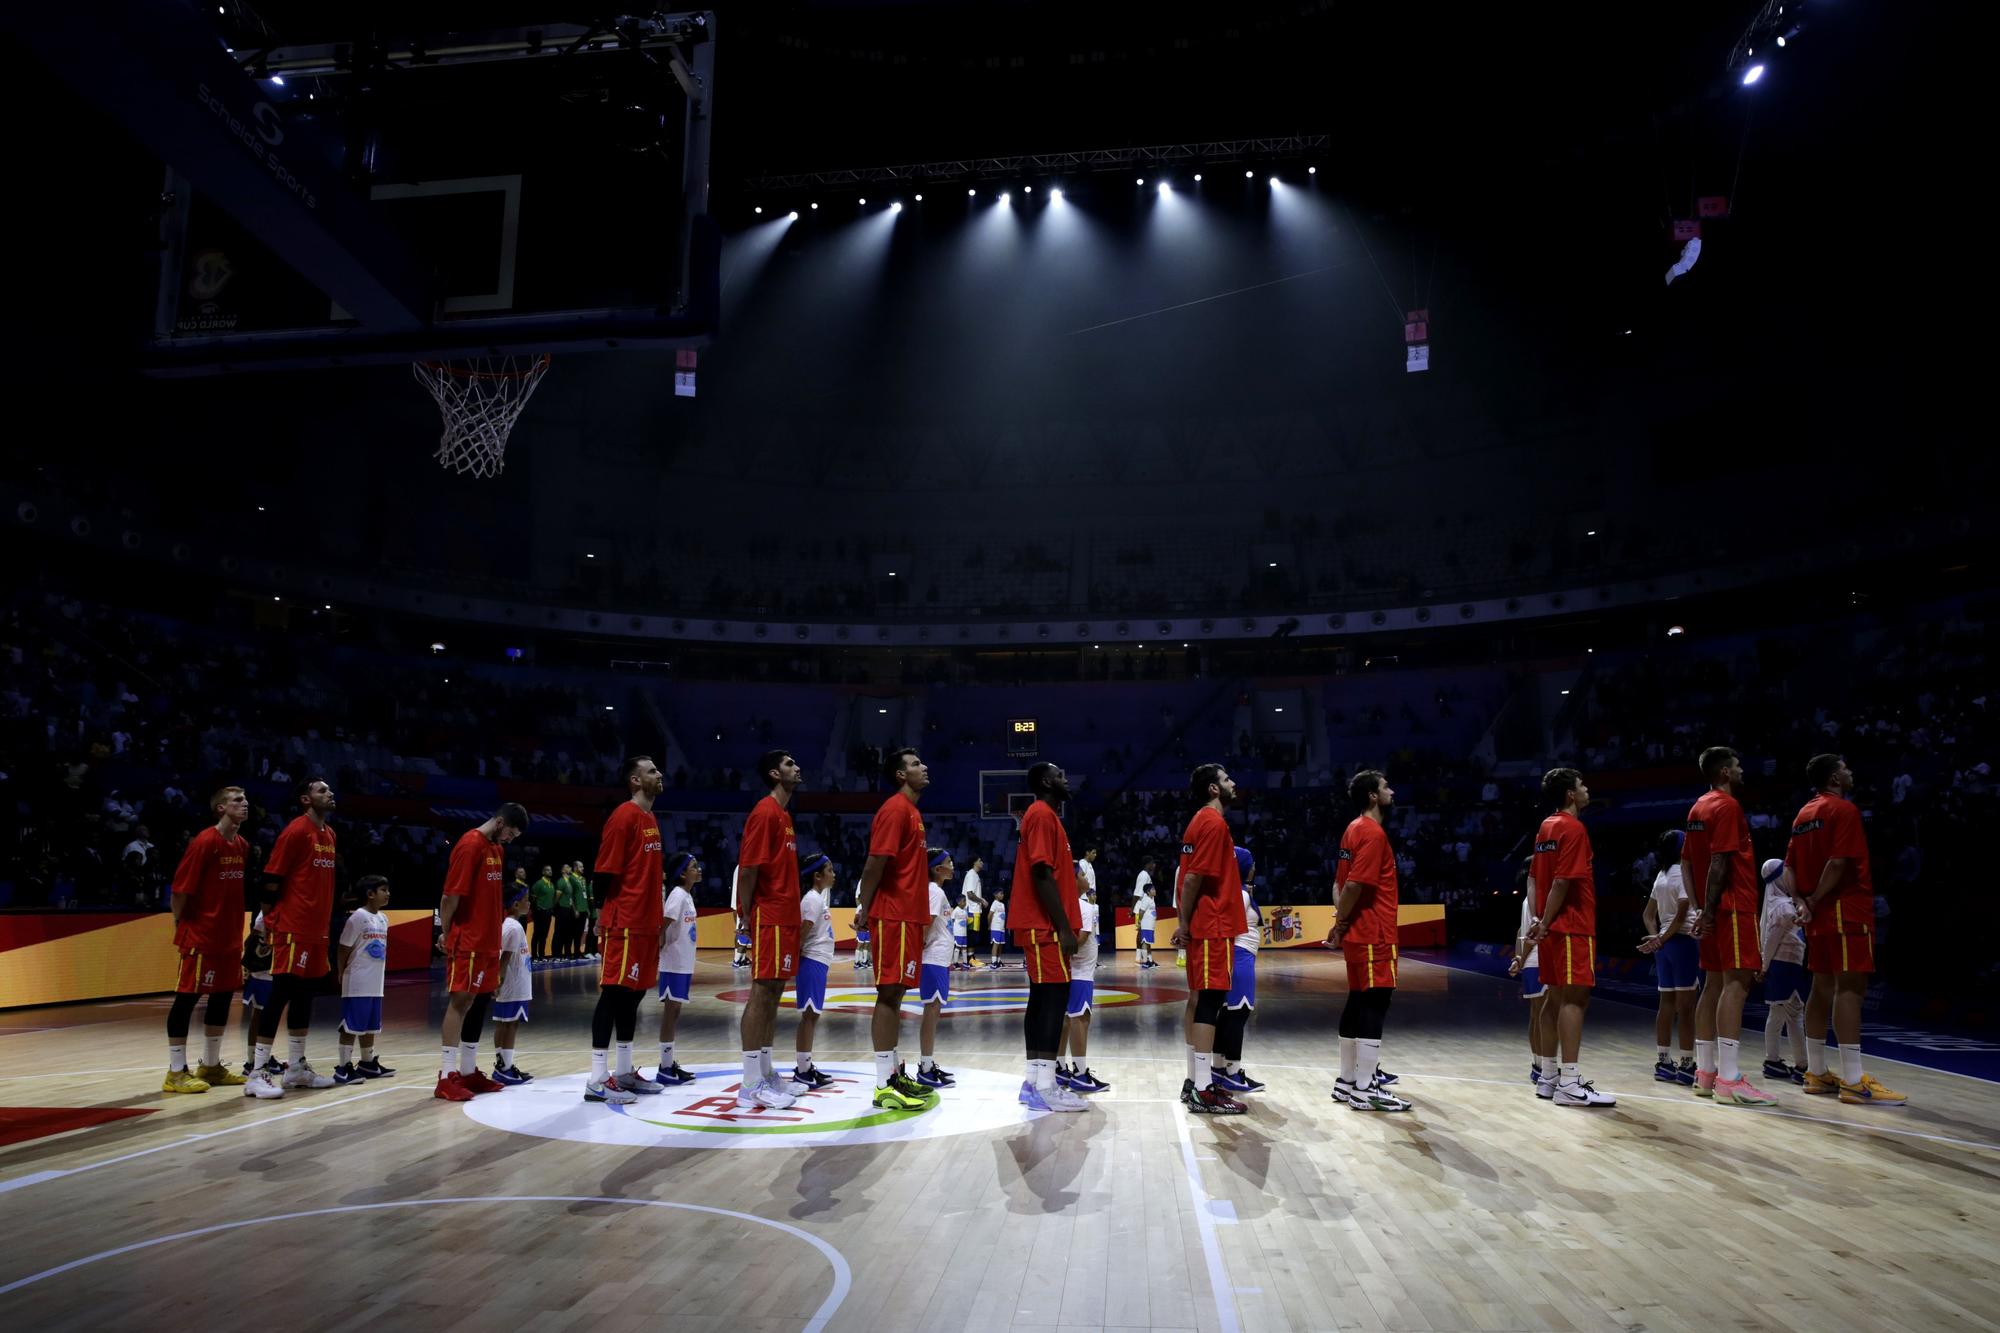 FIBA Basketball World Cup 2023 - Brazil vs Spain